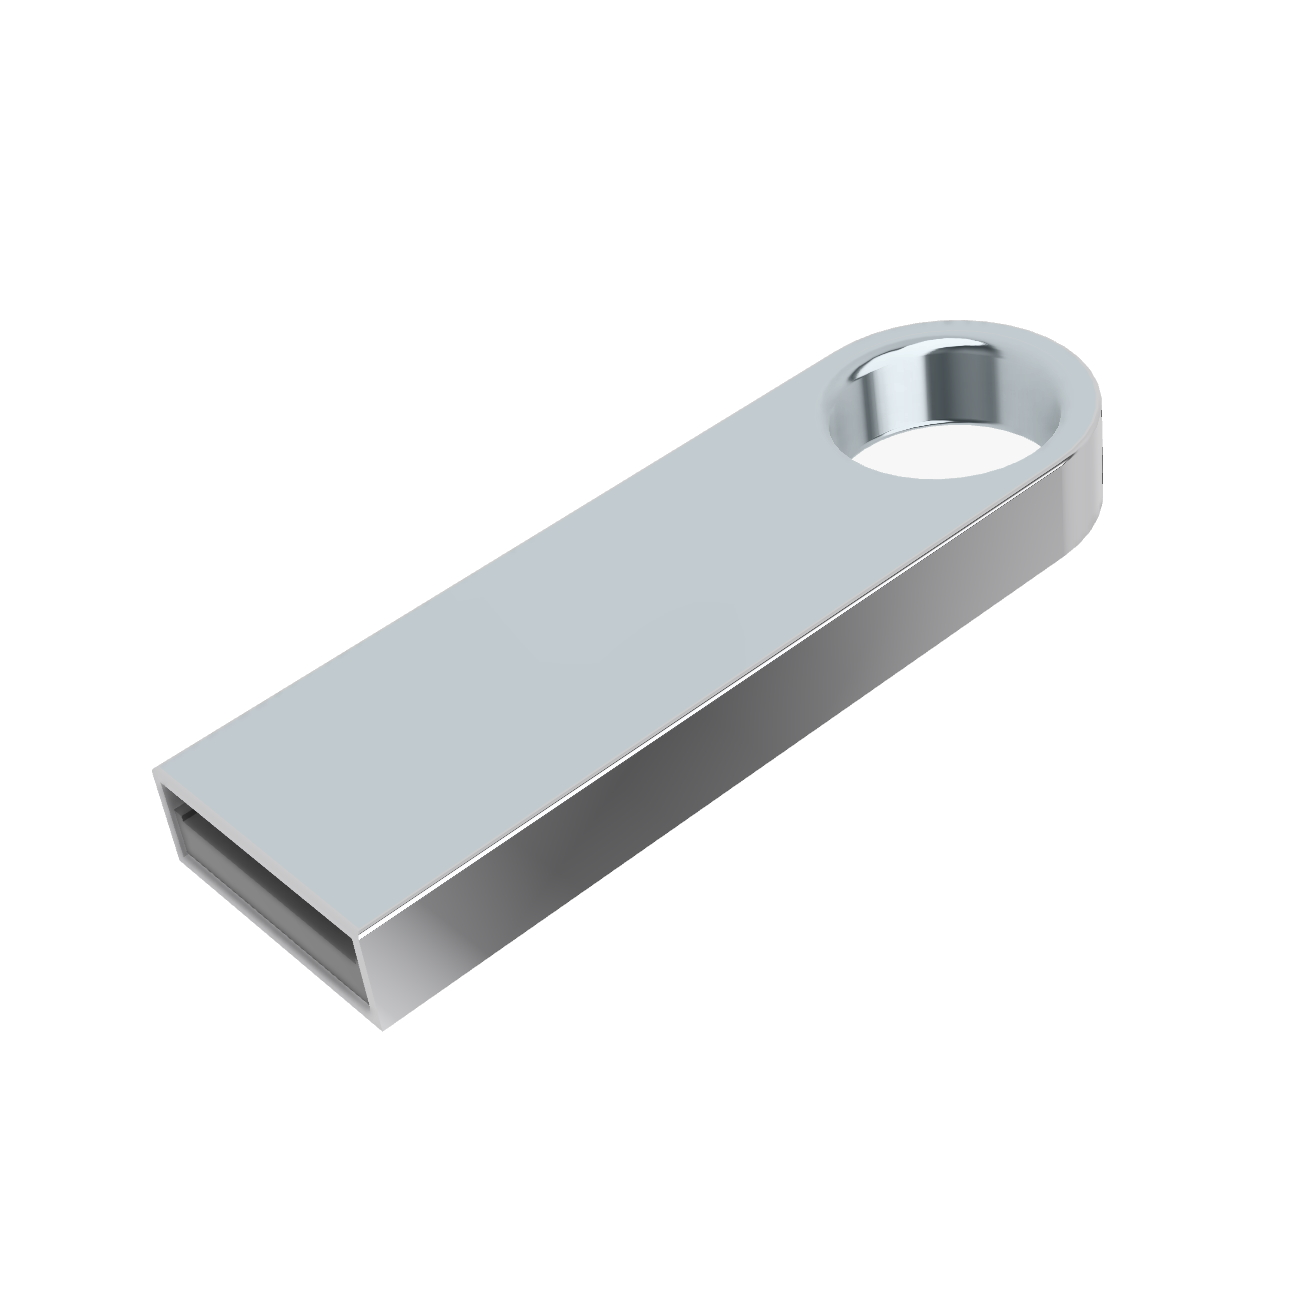 ® GB) GERMANY SE09 USB-Stick (Silber, 64 USB